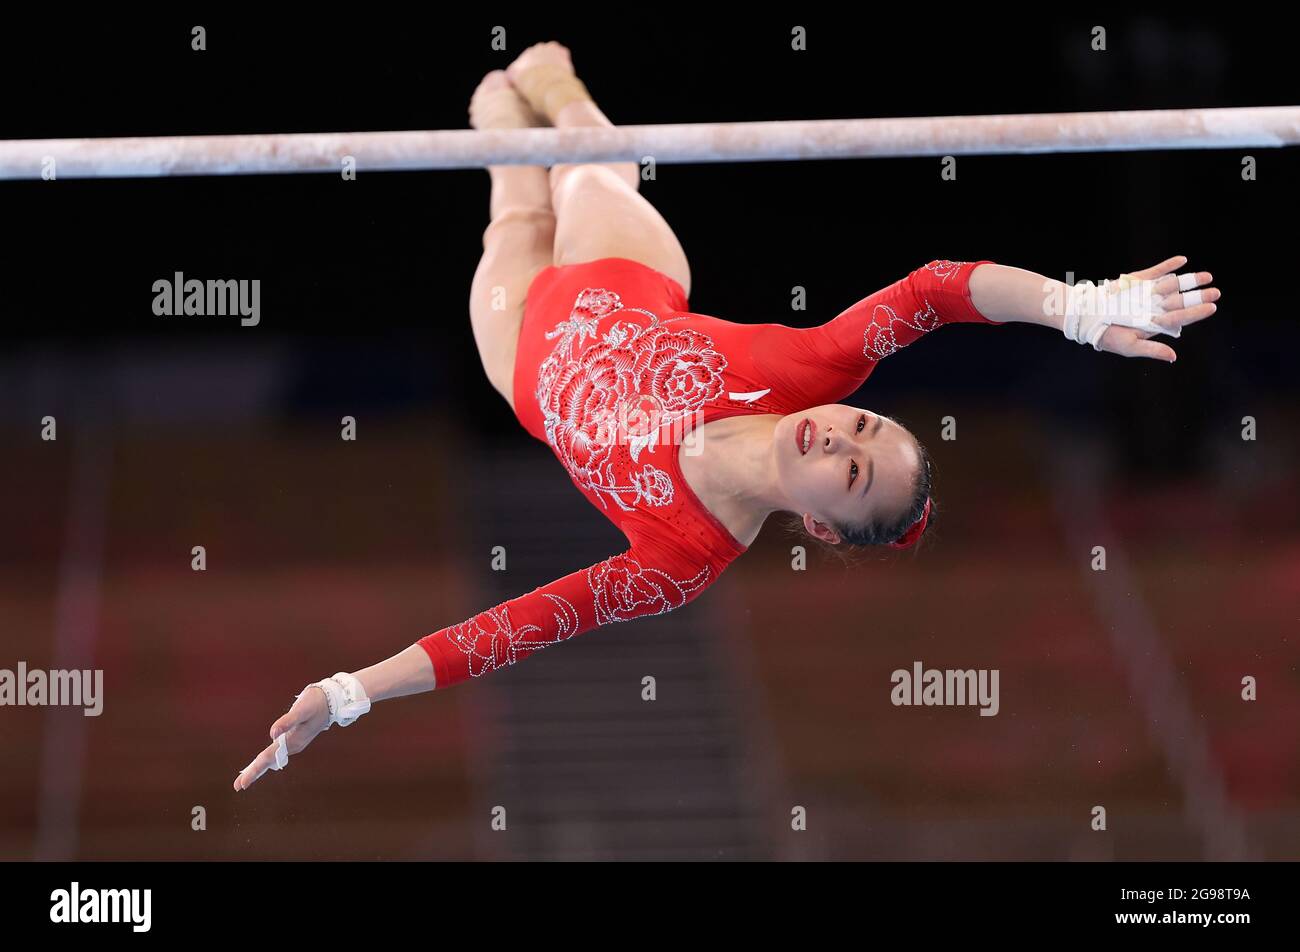 Games artistic tokyo 2020 gymnastics olympic Gymnastics